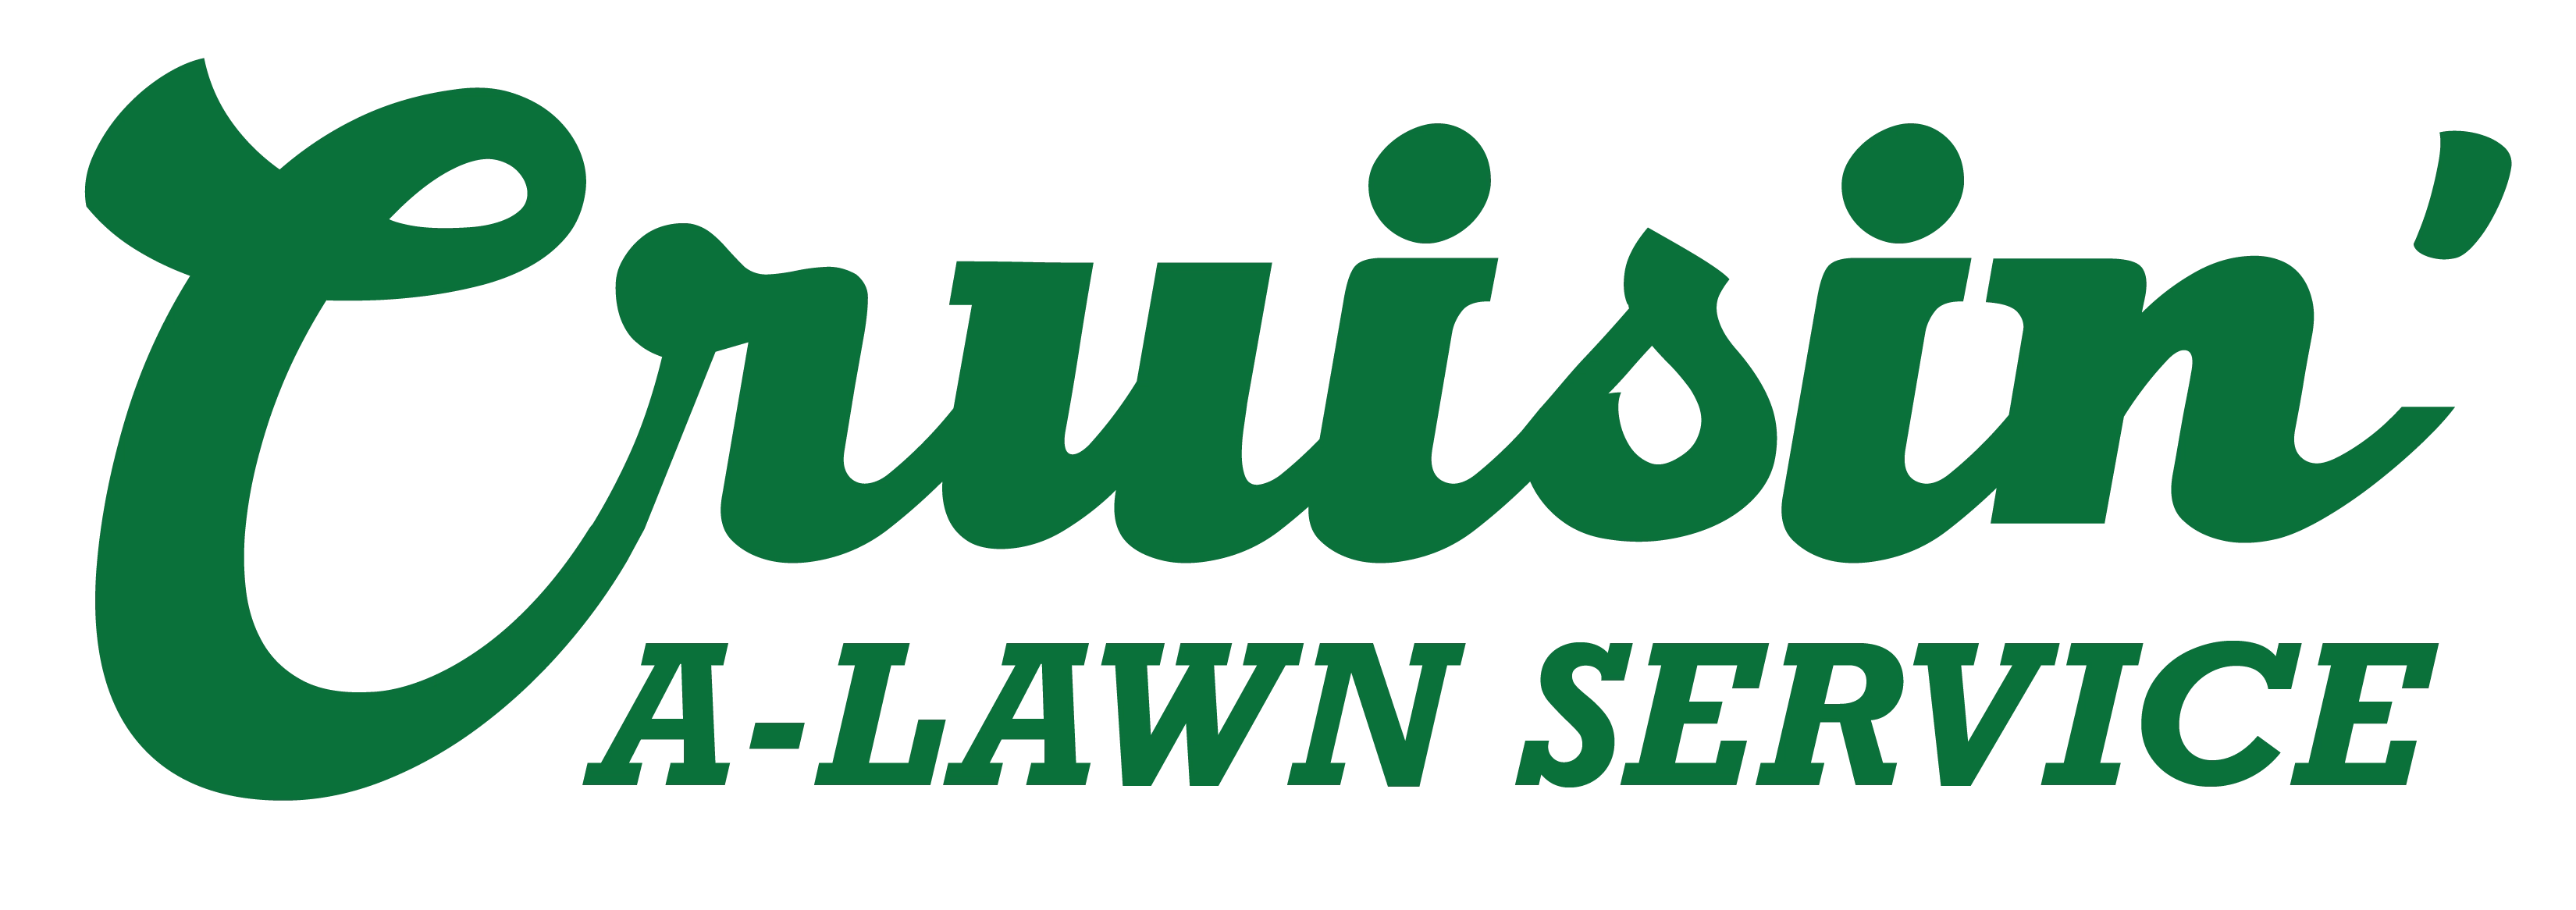 Cruisin' A-Lawn Service Logo